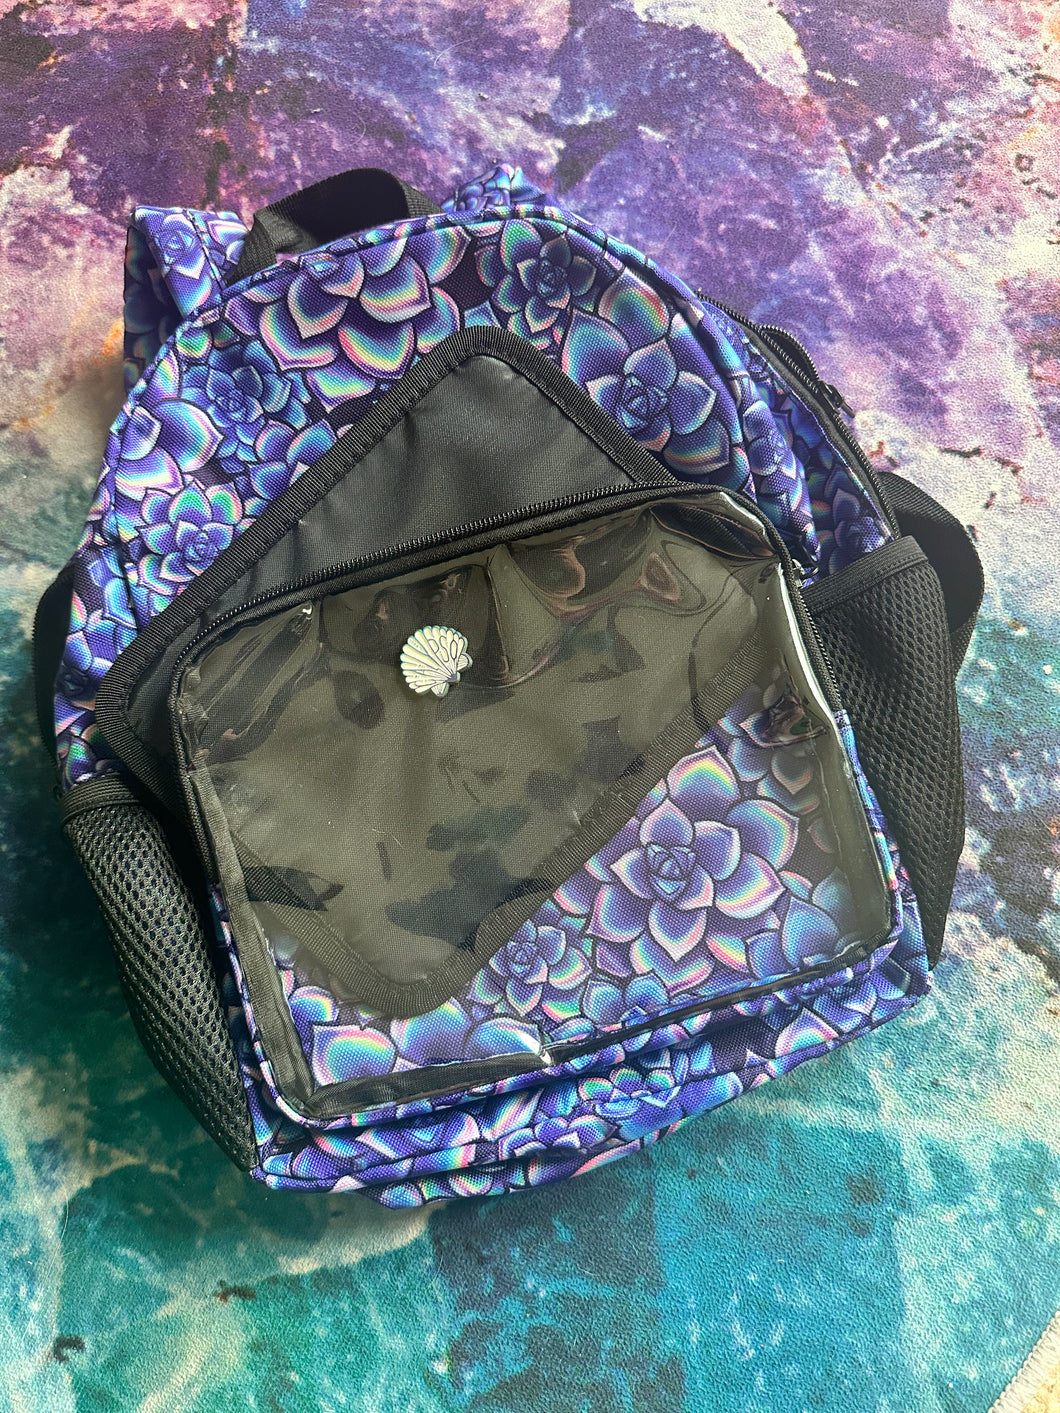 Small ITA Backpack